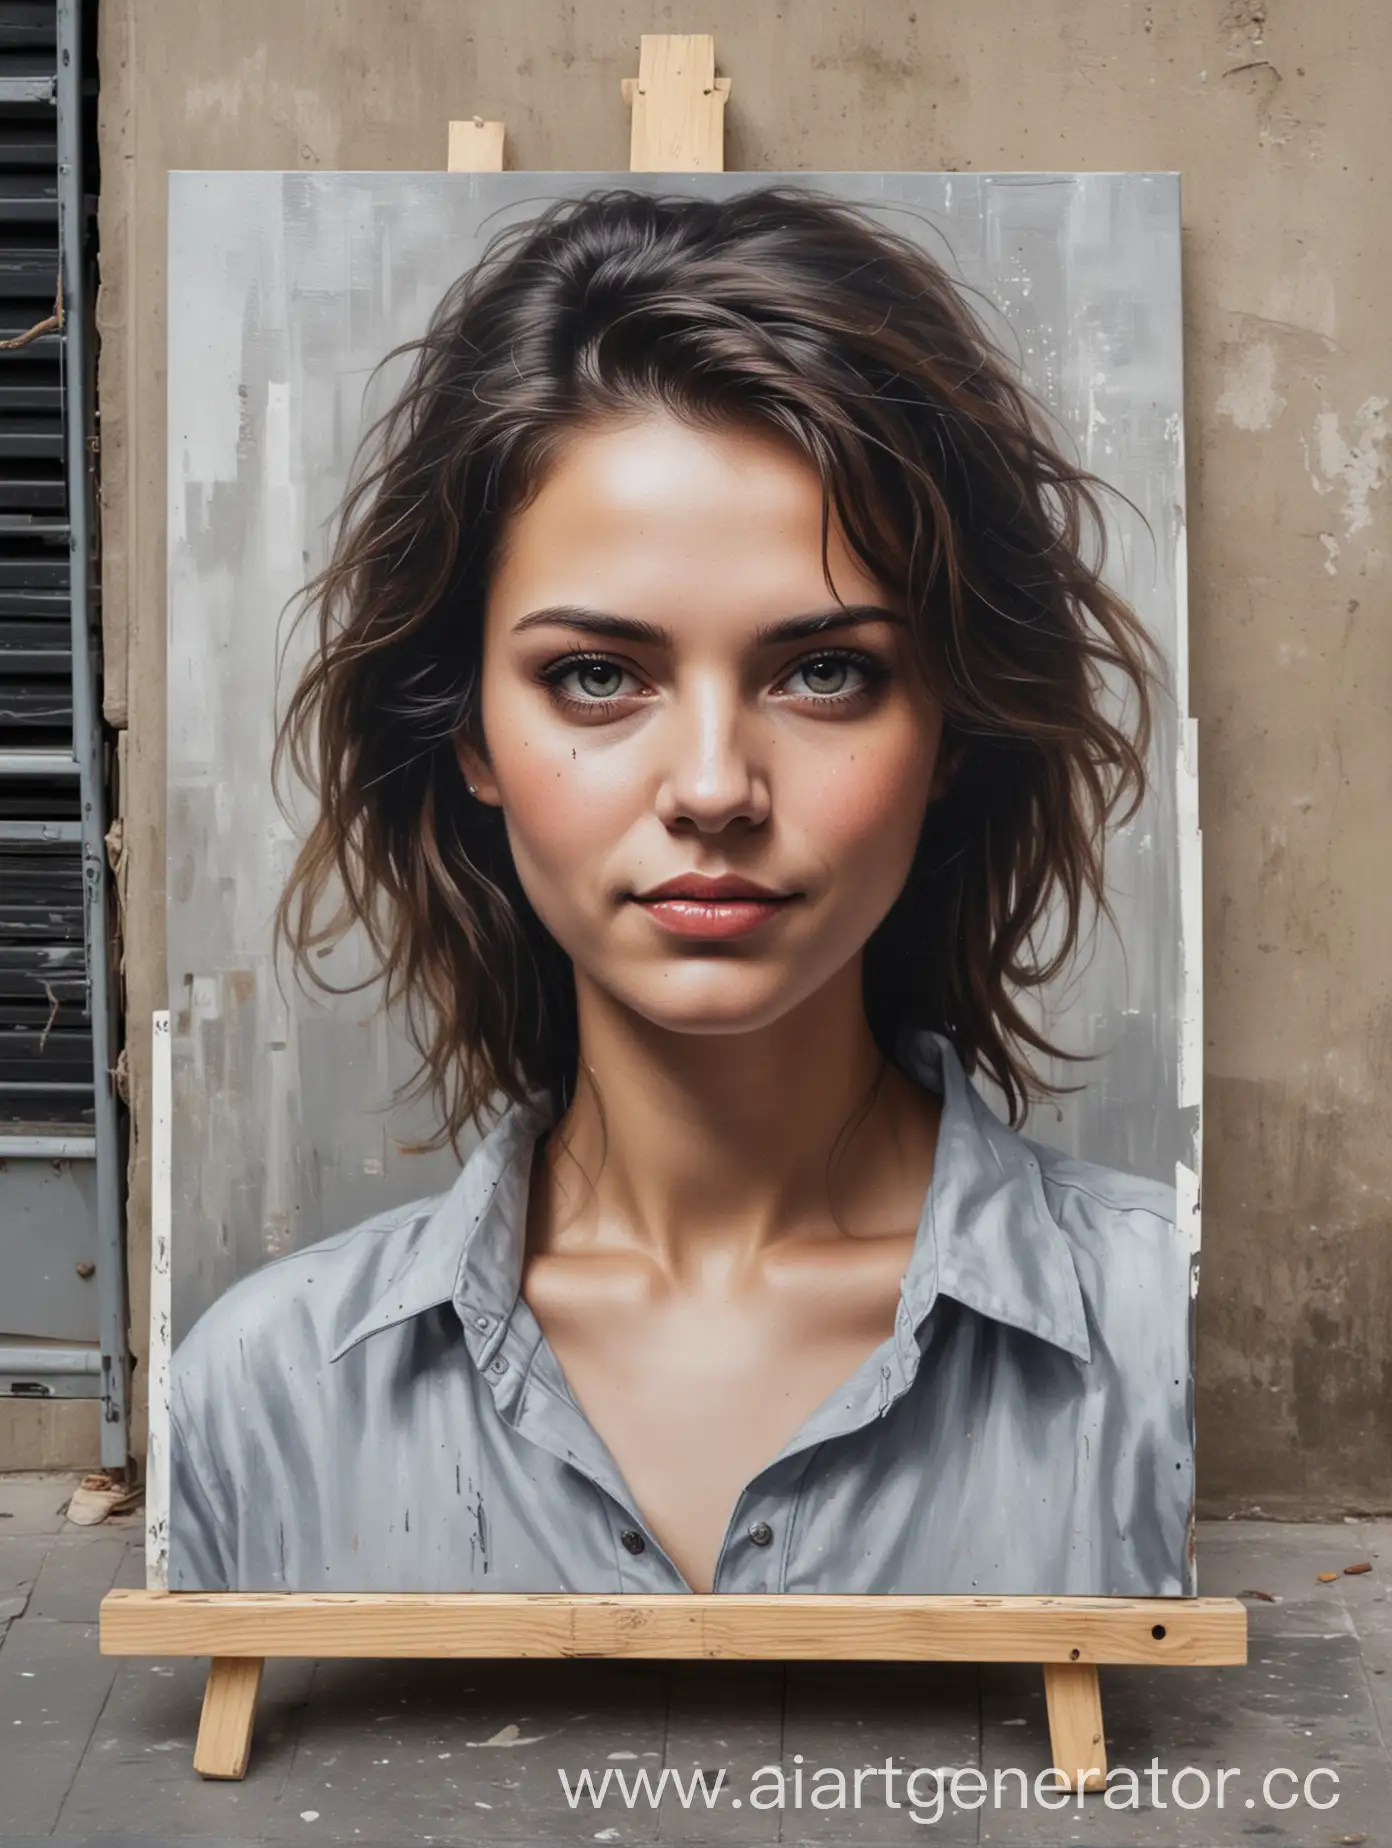 Портрет на холсте размером 50х70 сантиметров стоит на улице на полу